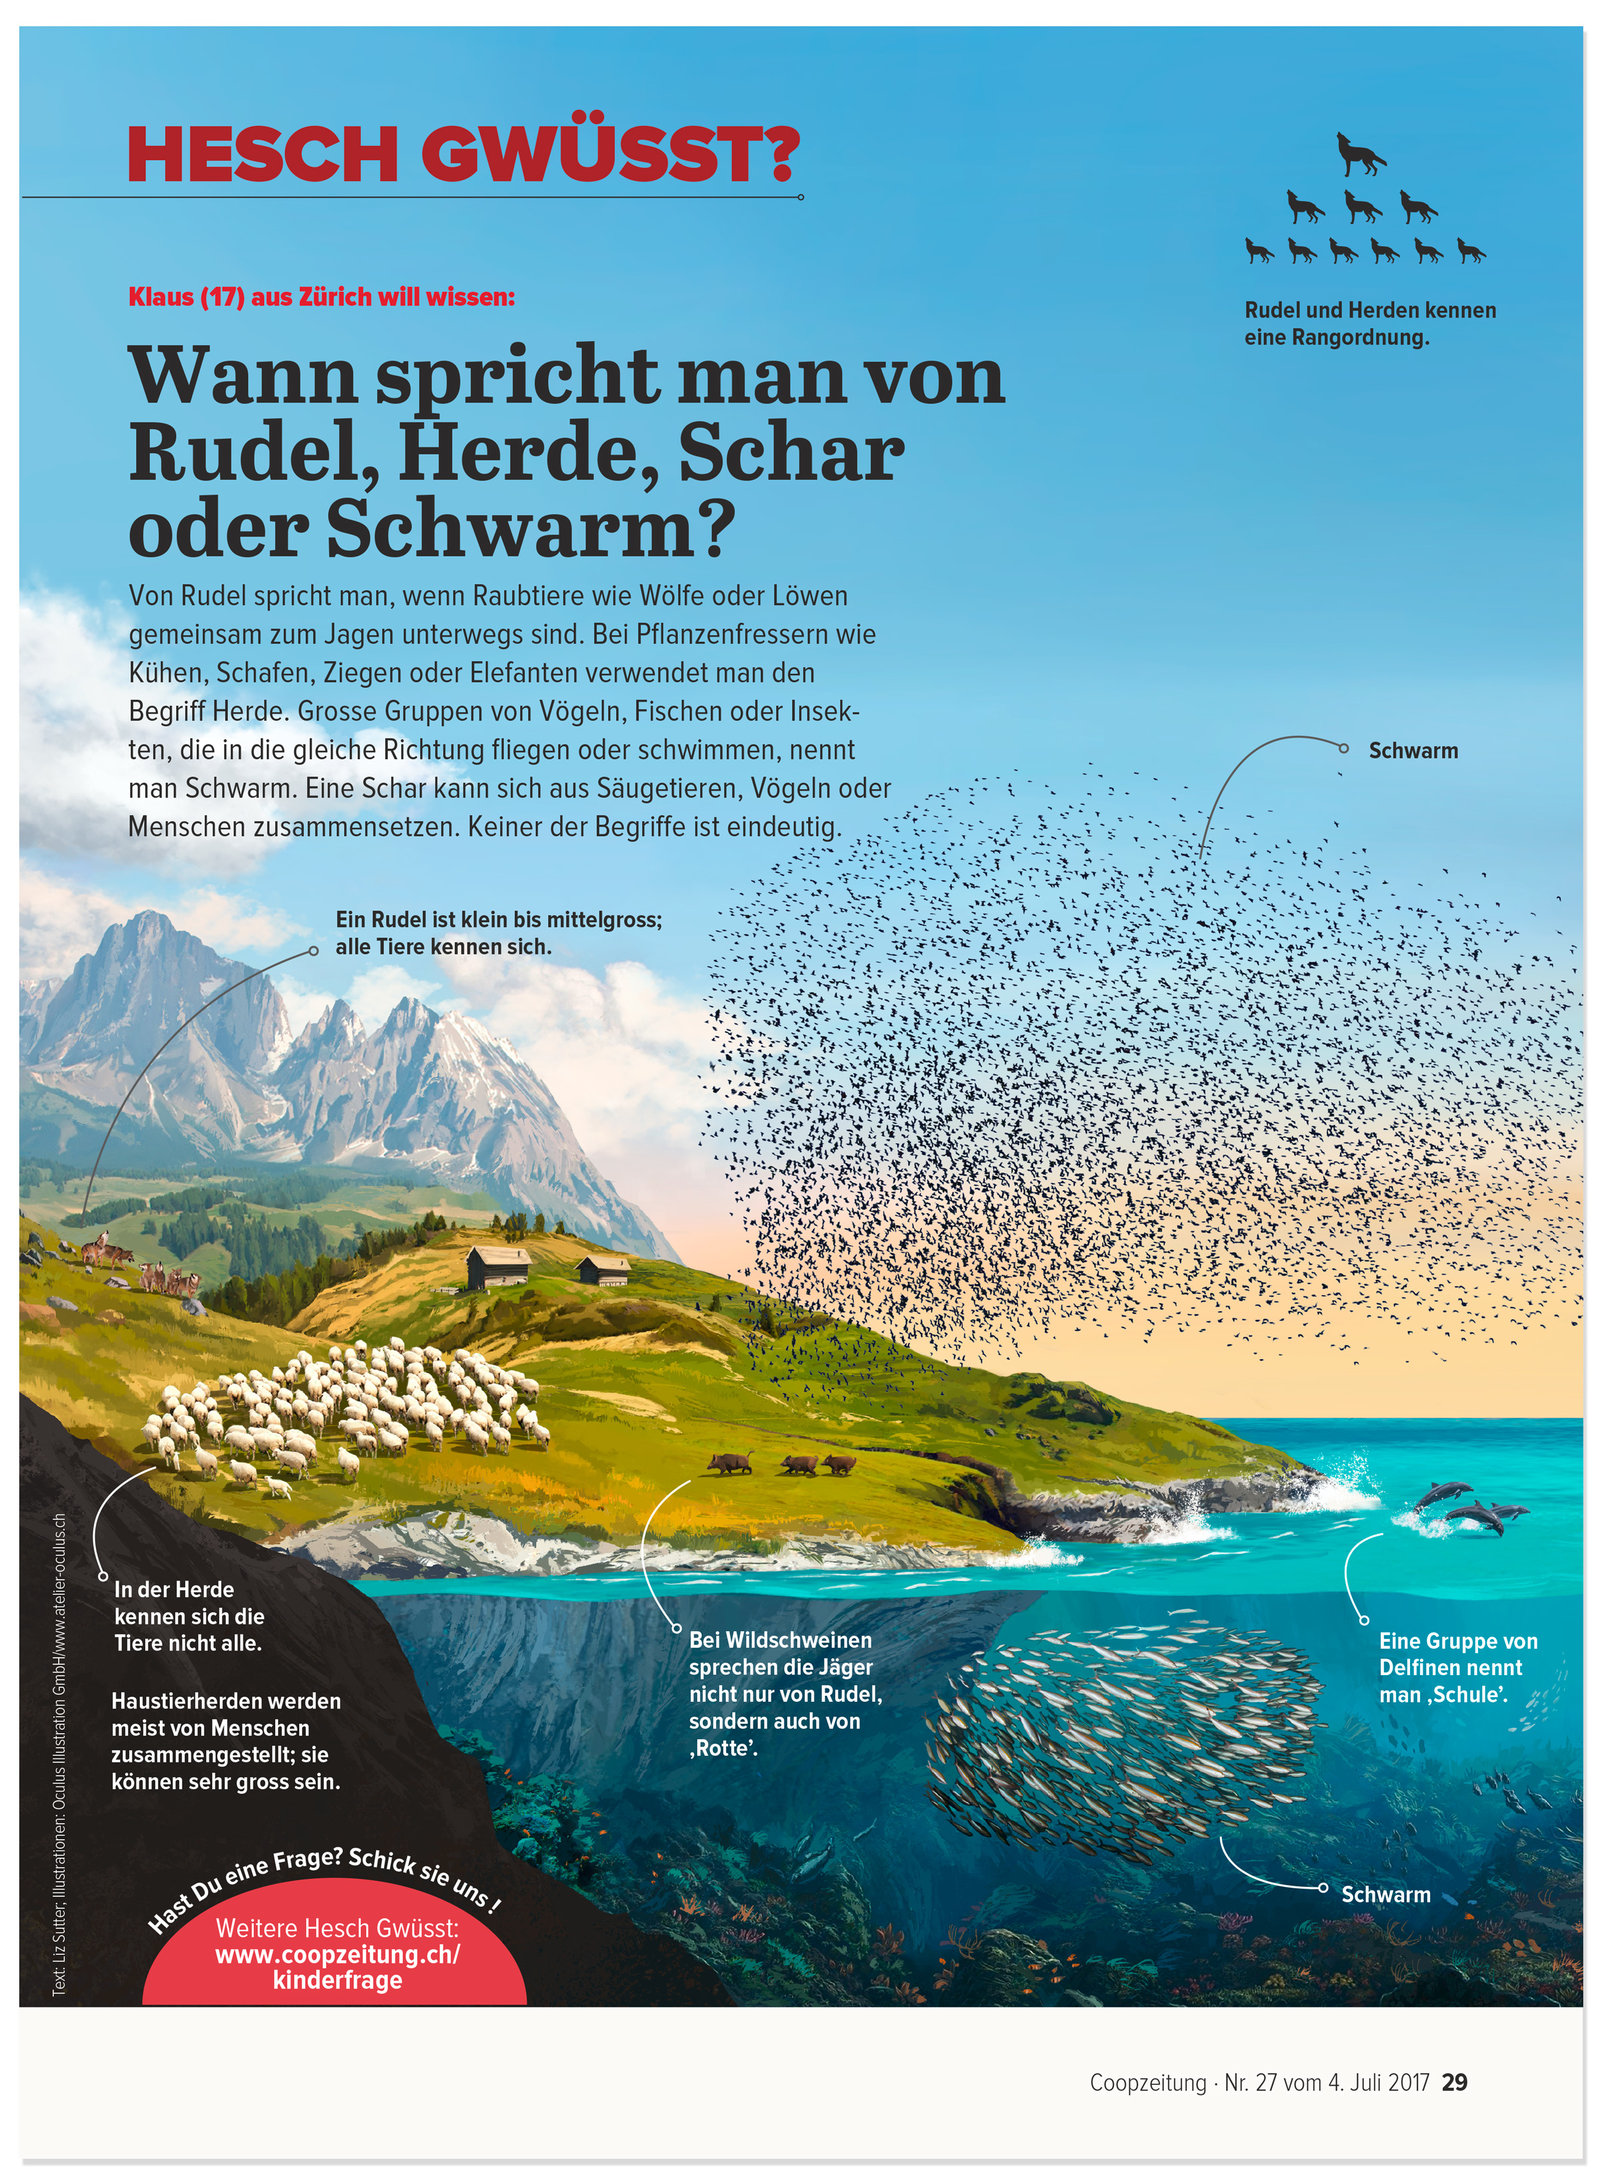 oculus-illustration-coopzeitung-hesch-gwuesst-rudel-herde-schwarm